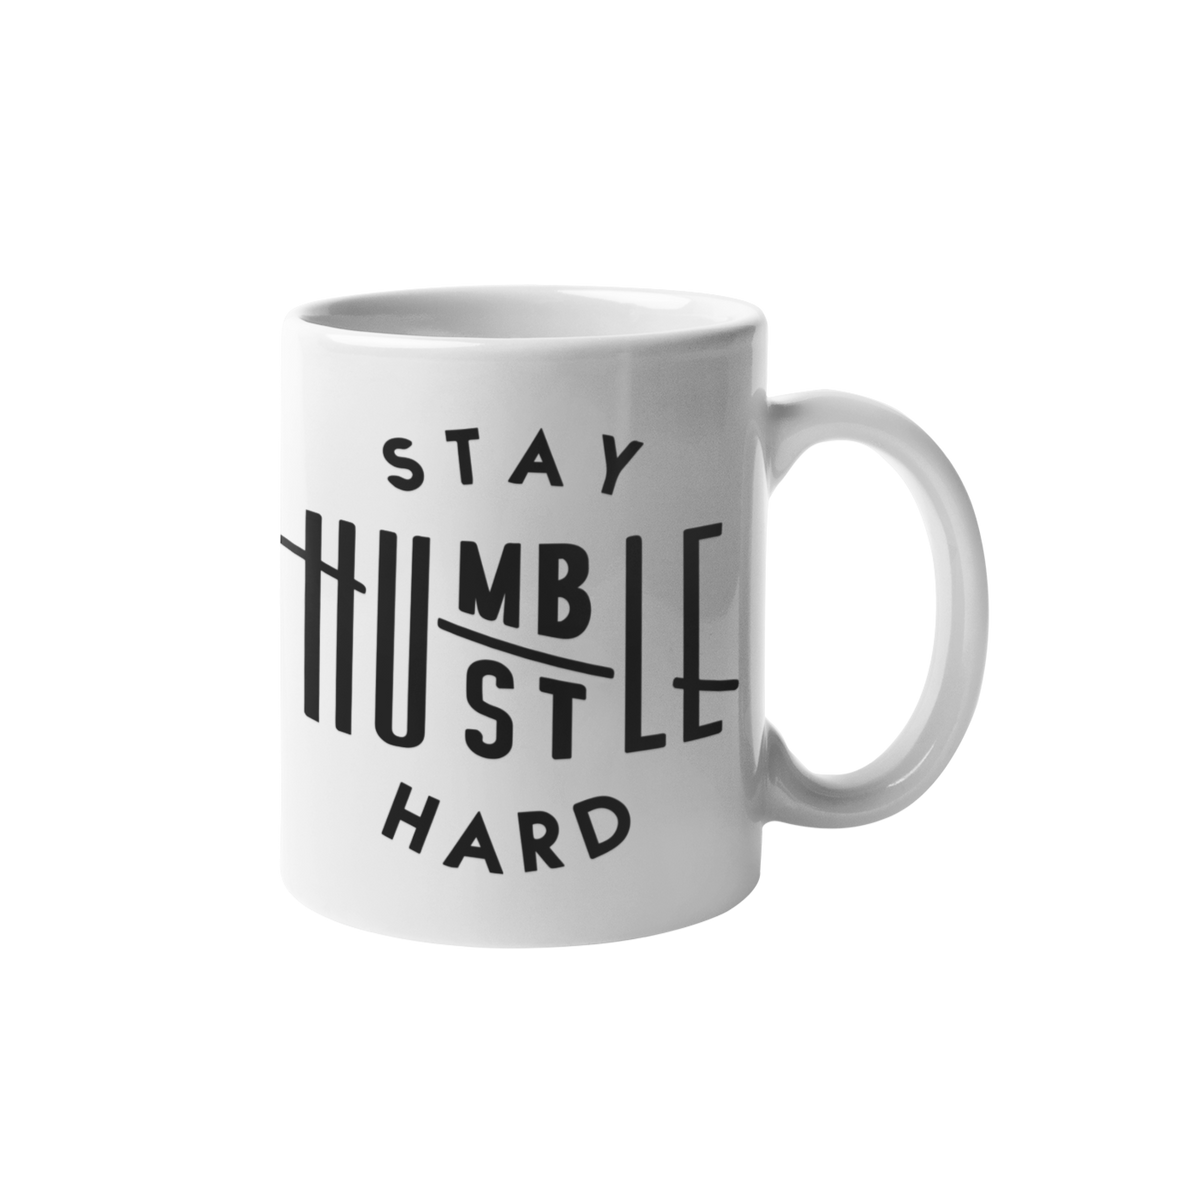 Stay humble - Mug